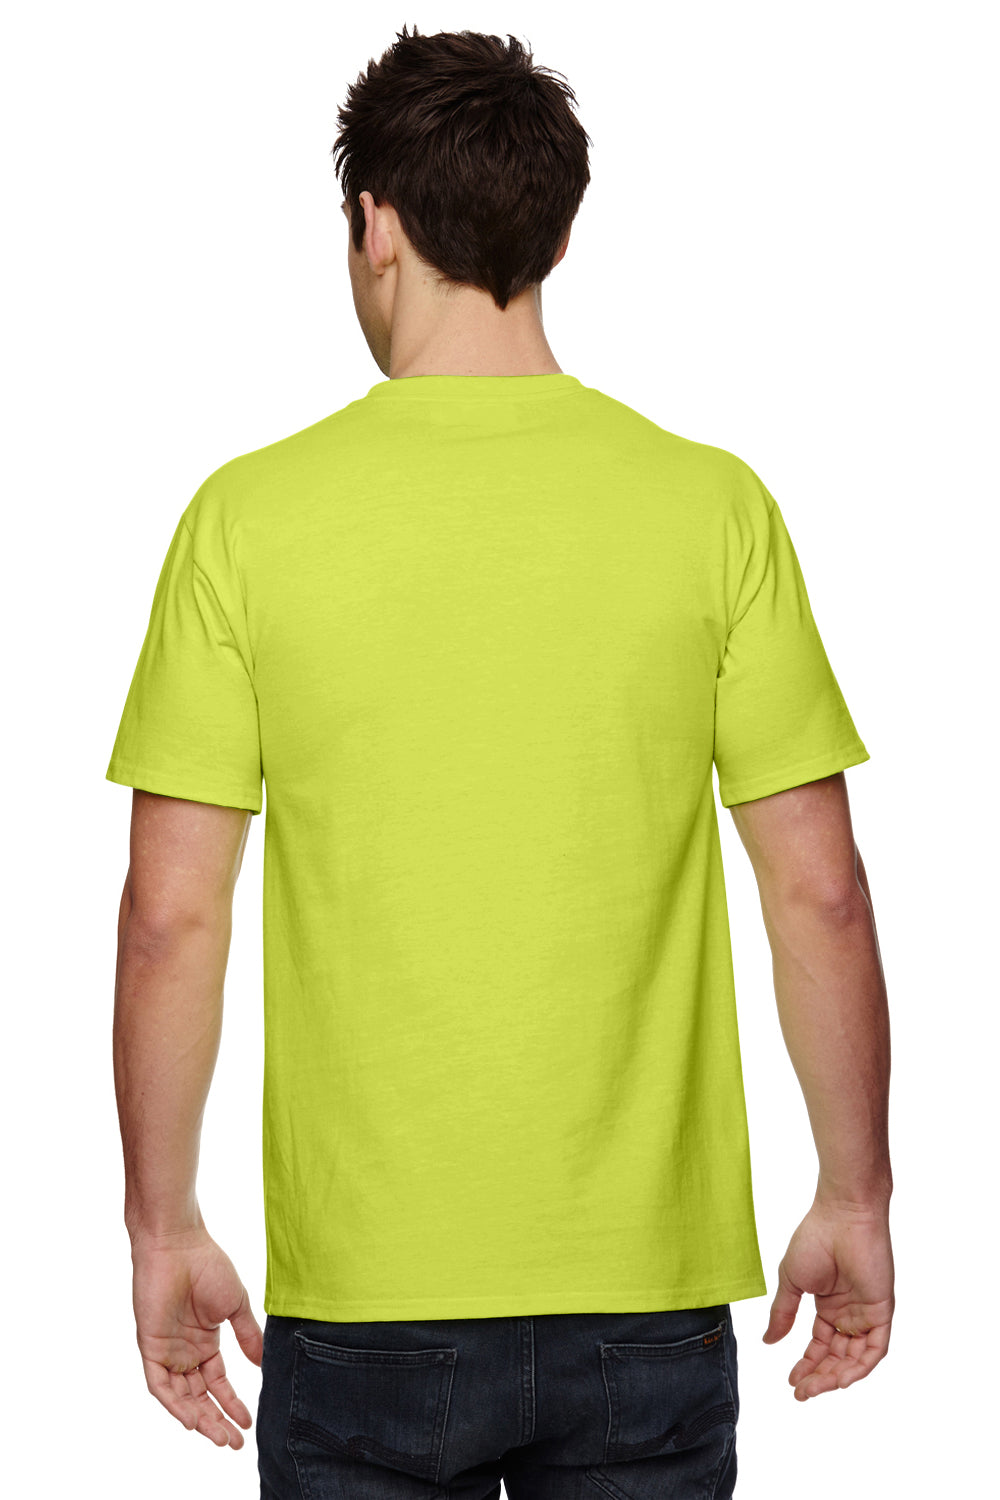 Fruit Of The Loom 3931P Mens HD Jersey Short Sleeve Crewneck T-Shirt w/ Pocket Safety Green Back